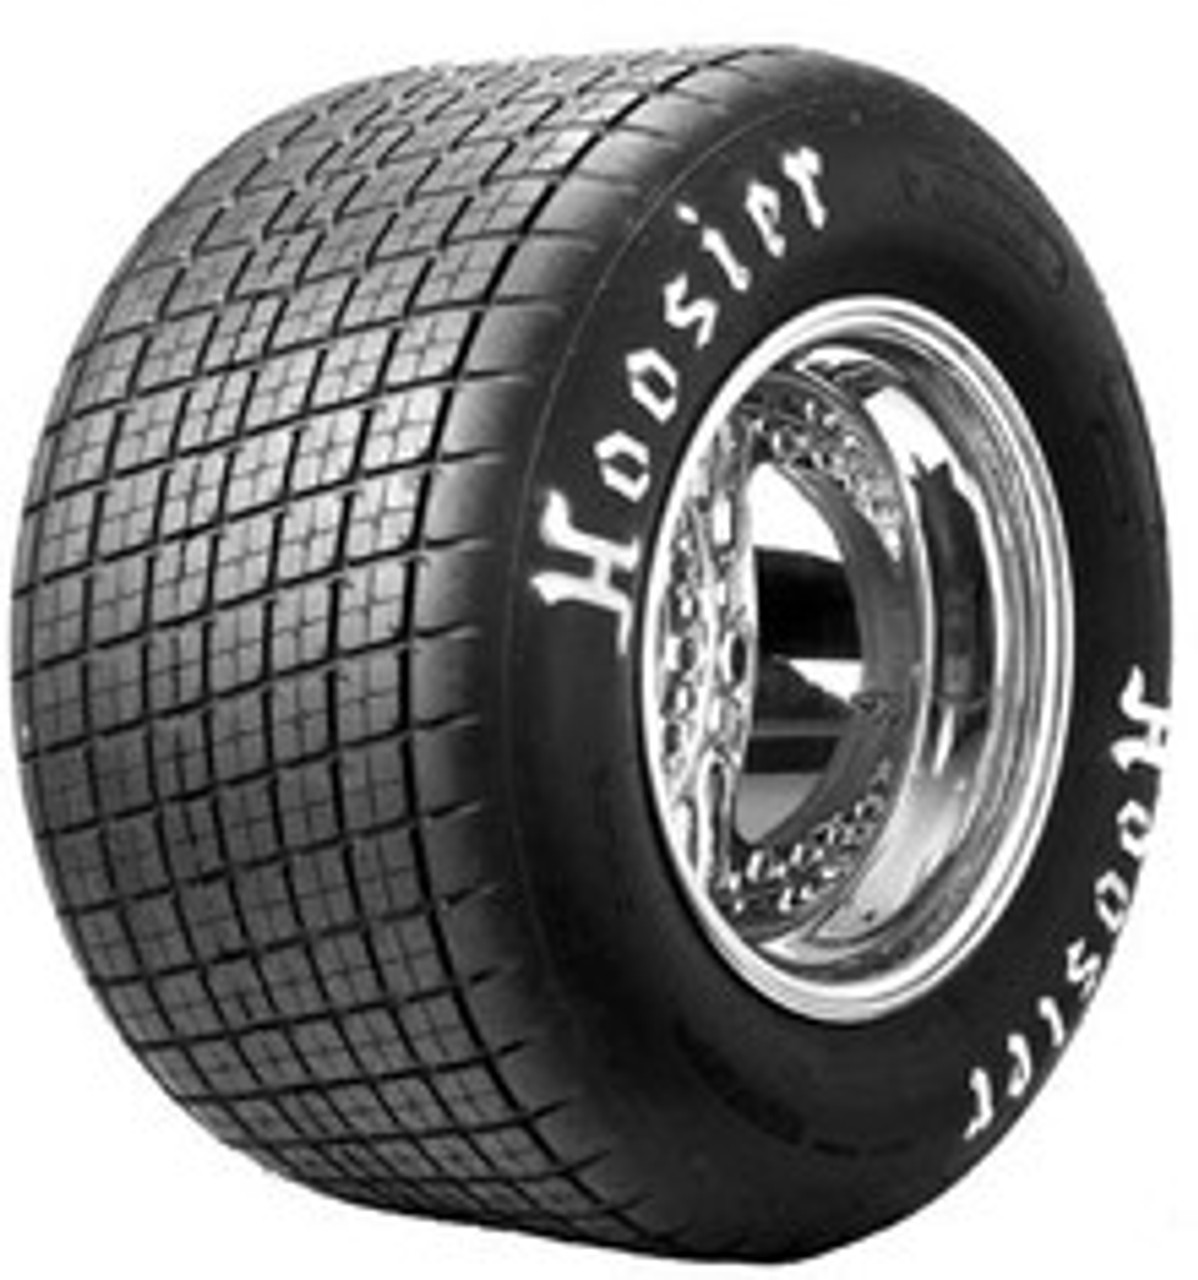 Hoosier Late Model Dirt Tire 28.5/11.0-15 AB USA21 - 36606USA21